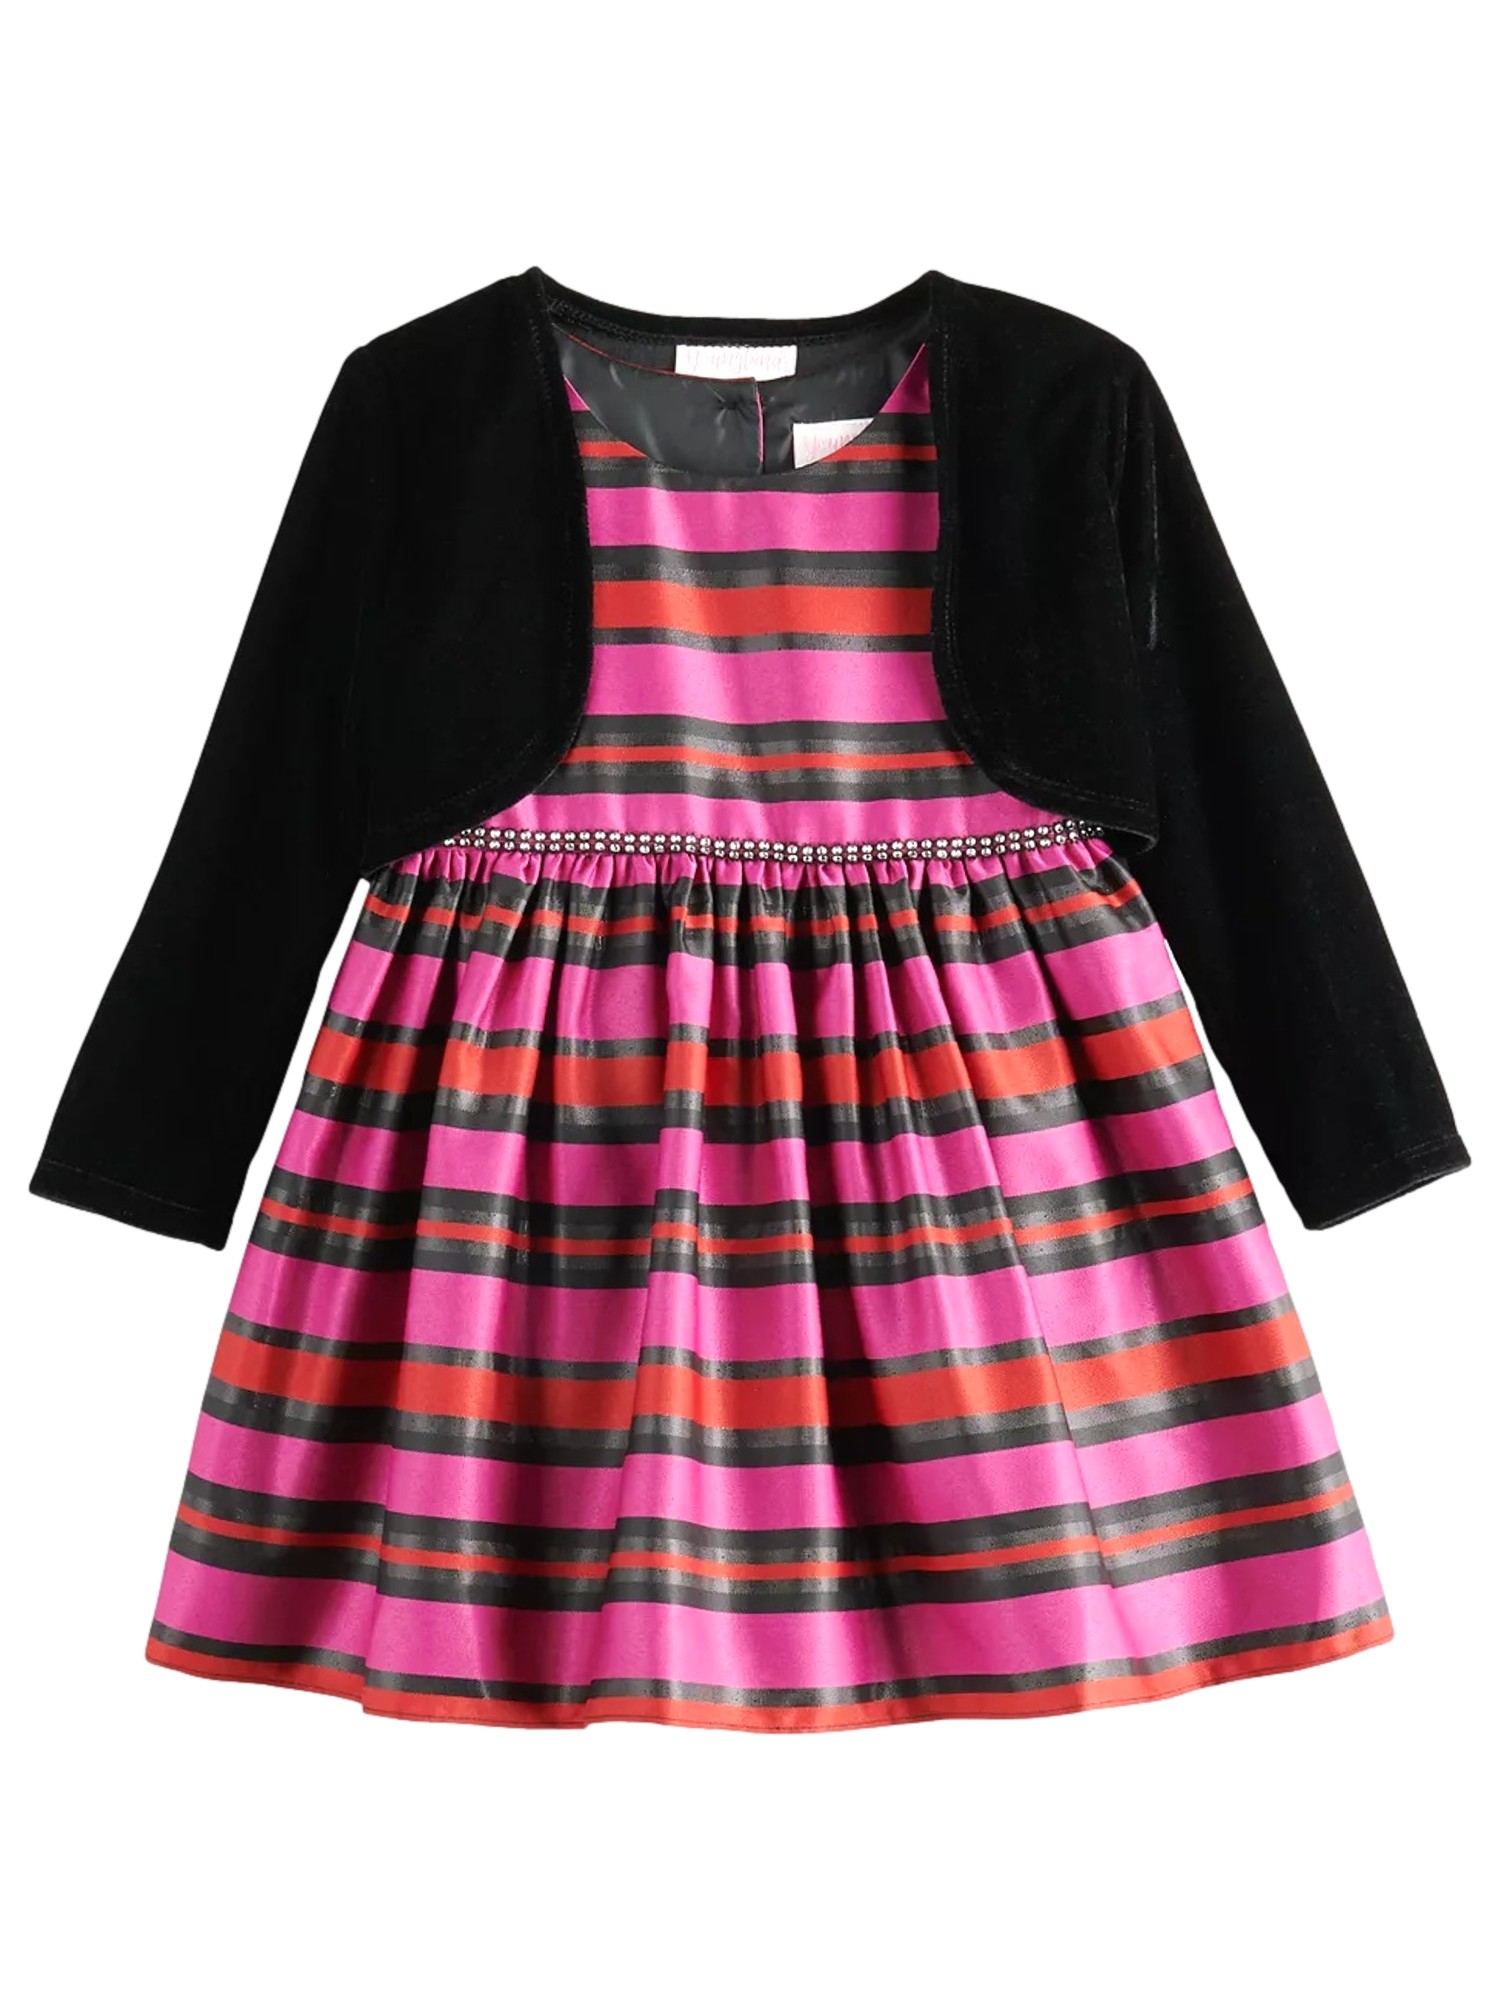 Youngland Toddler Girls Pink Black Red Striped Satin Tank Party Dress & Shrug